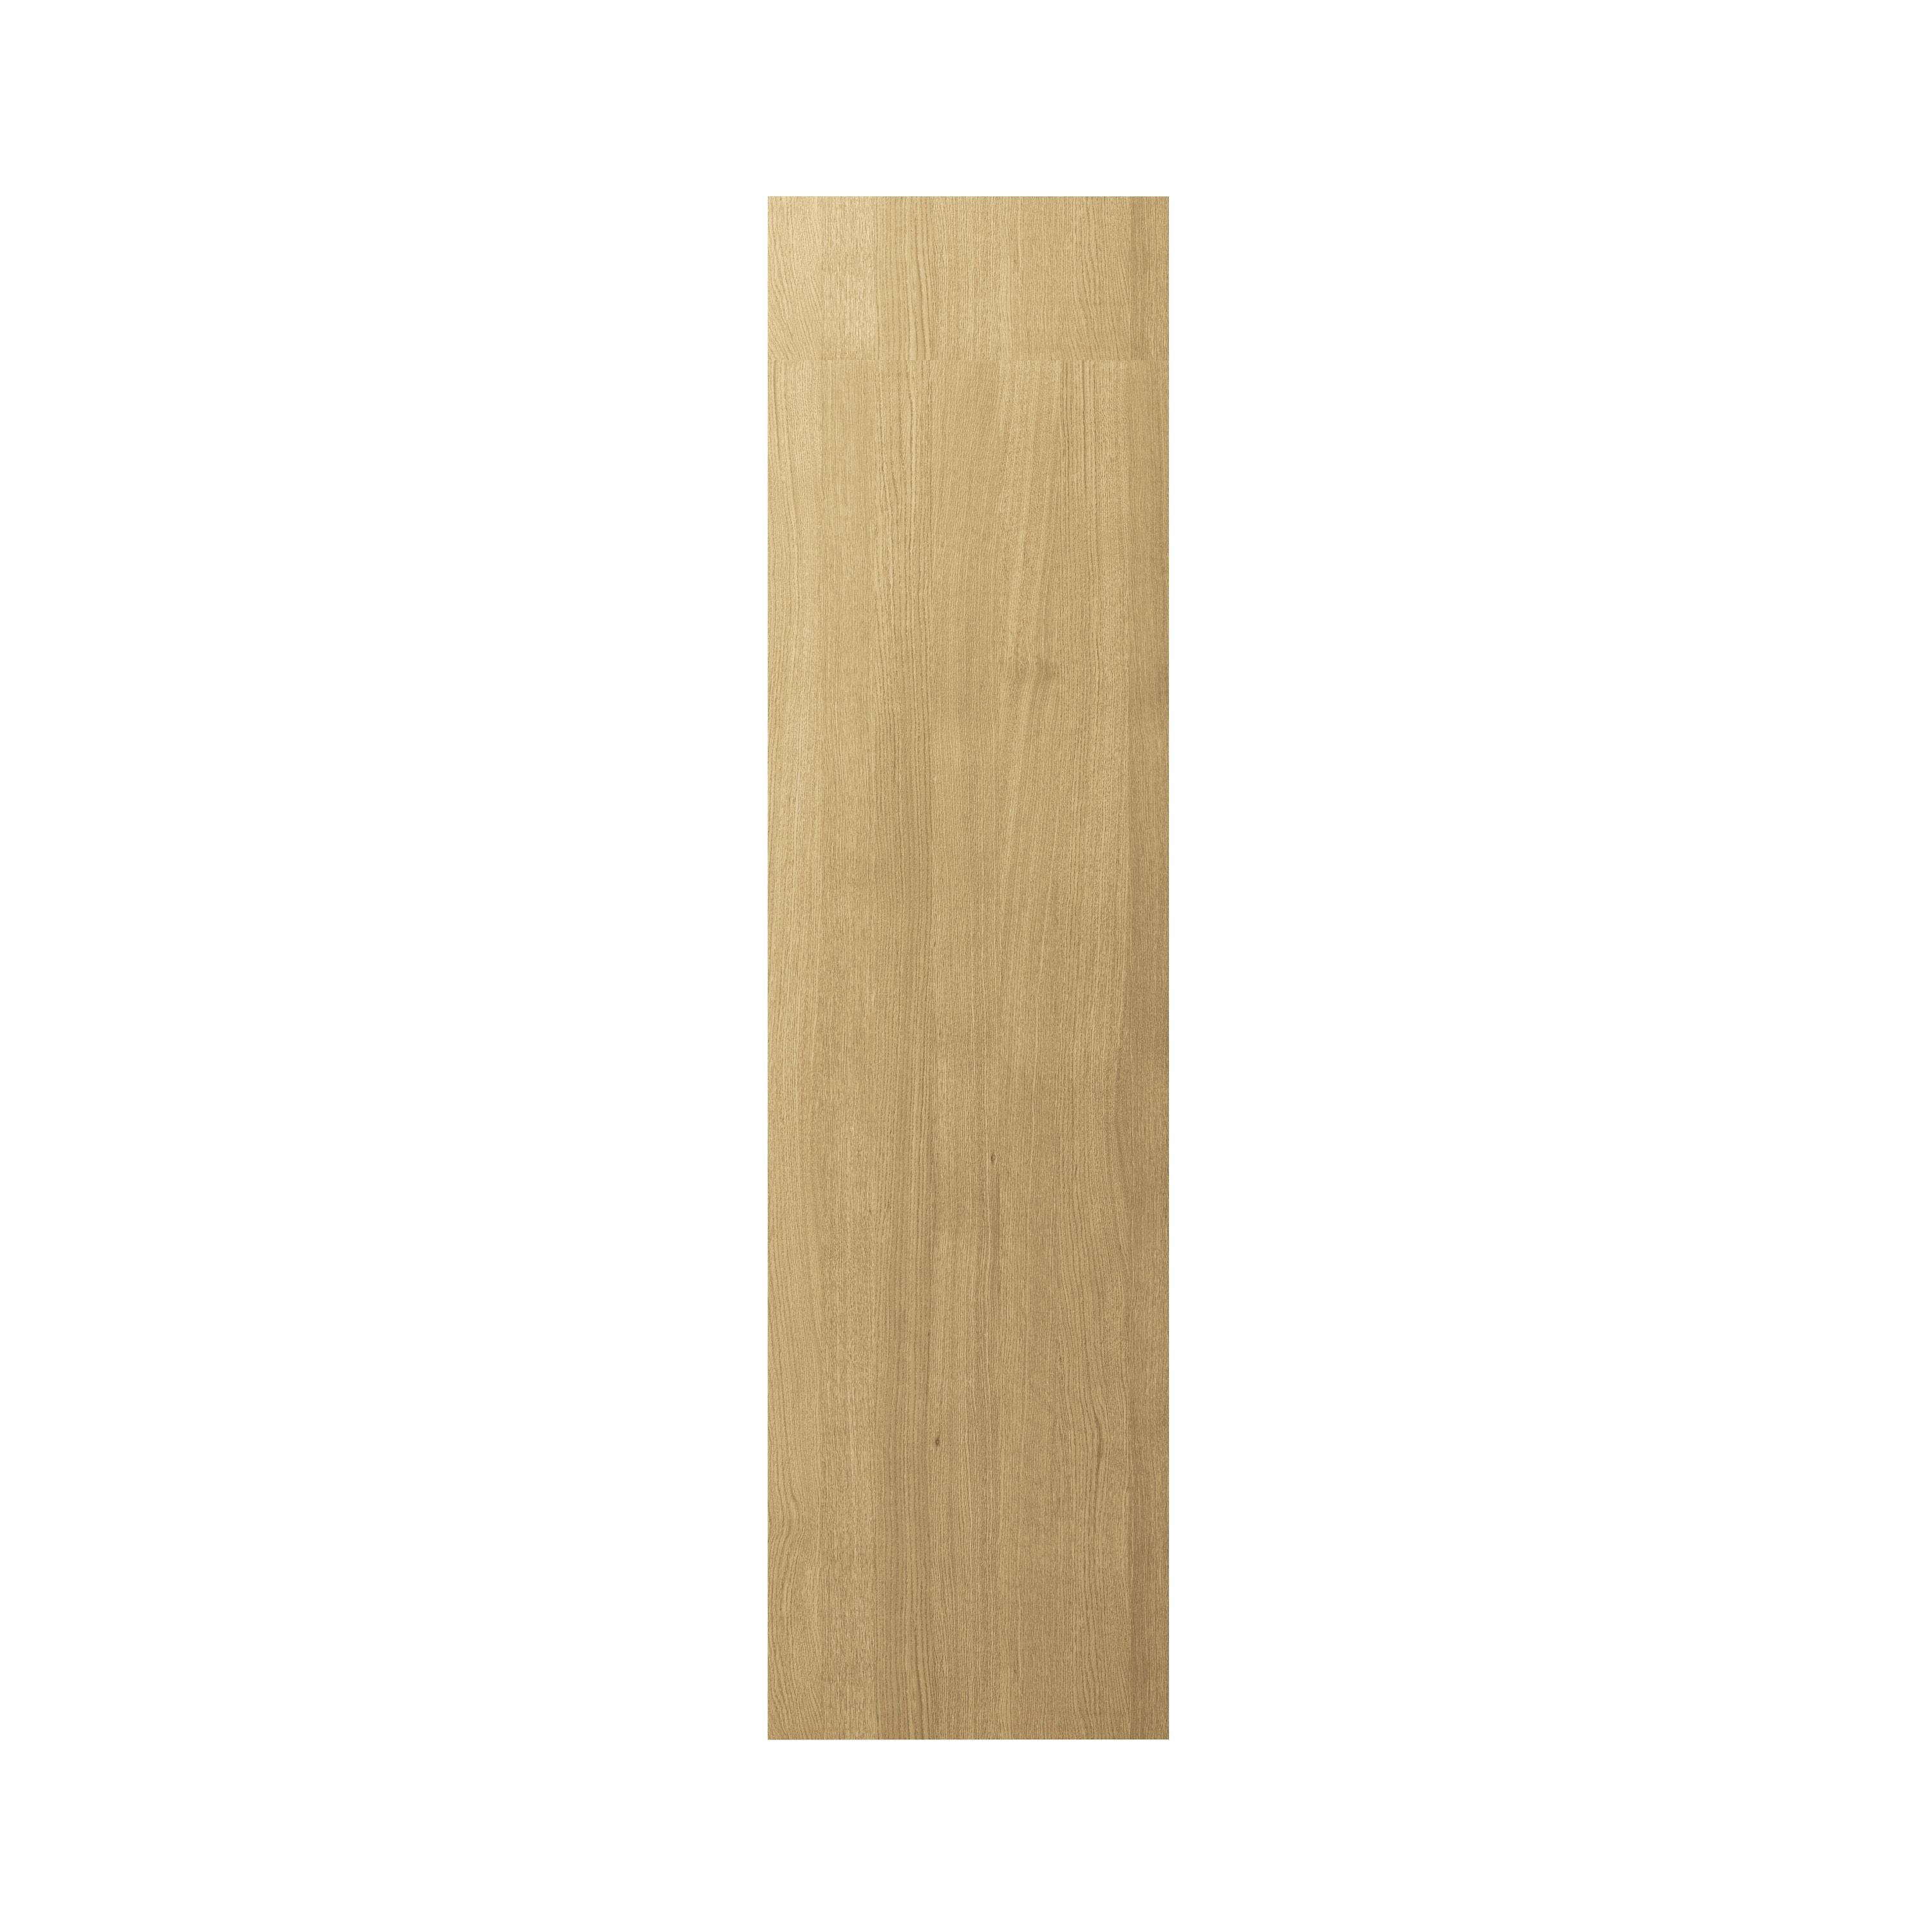 GoodHome Verbena Natural oak shaker Tall End panel (H)2190mm (W)570mm, Pair